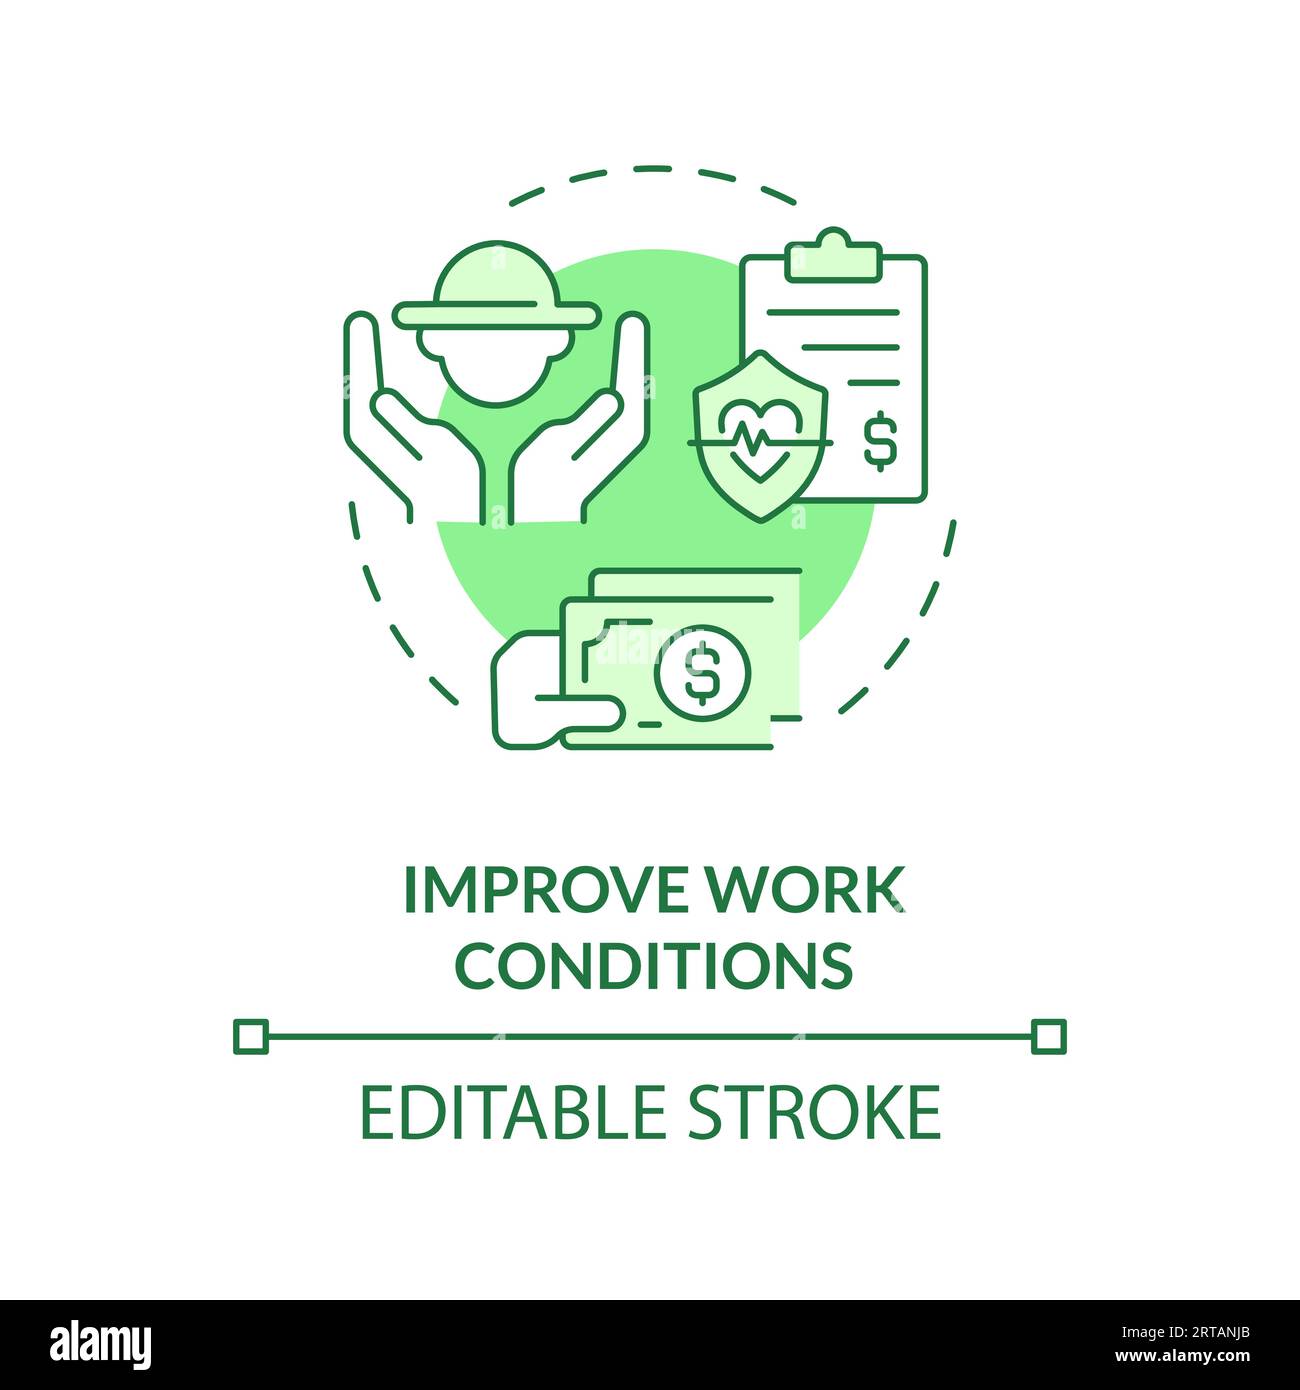 Improve work conditions green concept icon Stock Vector